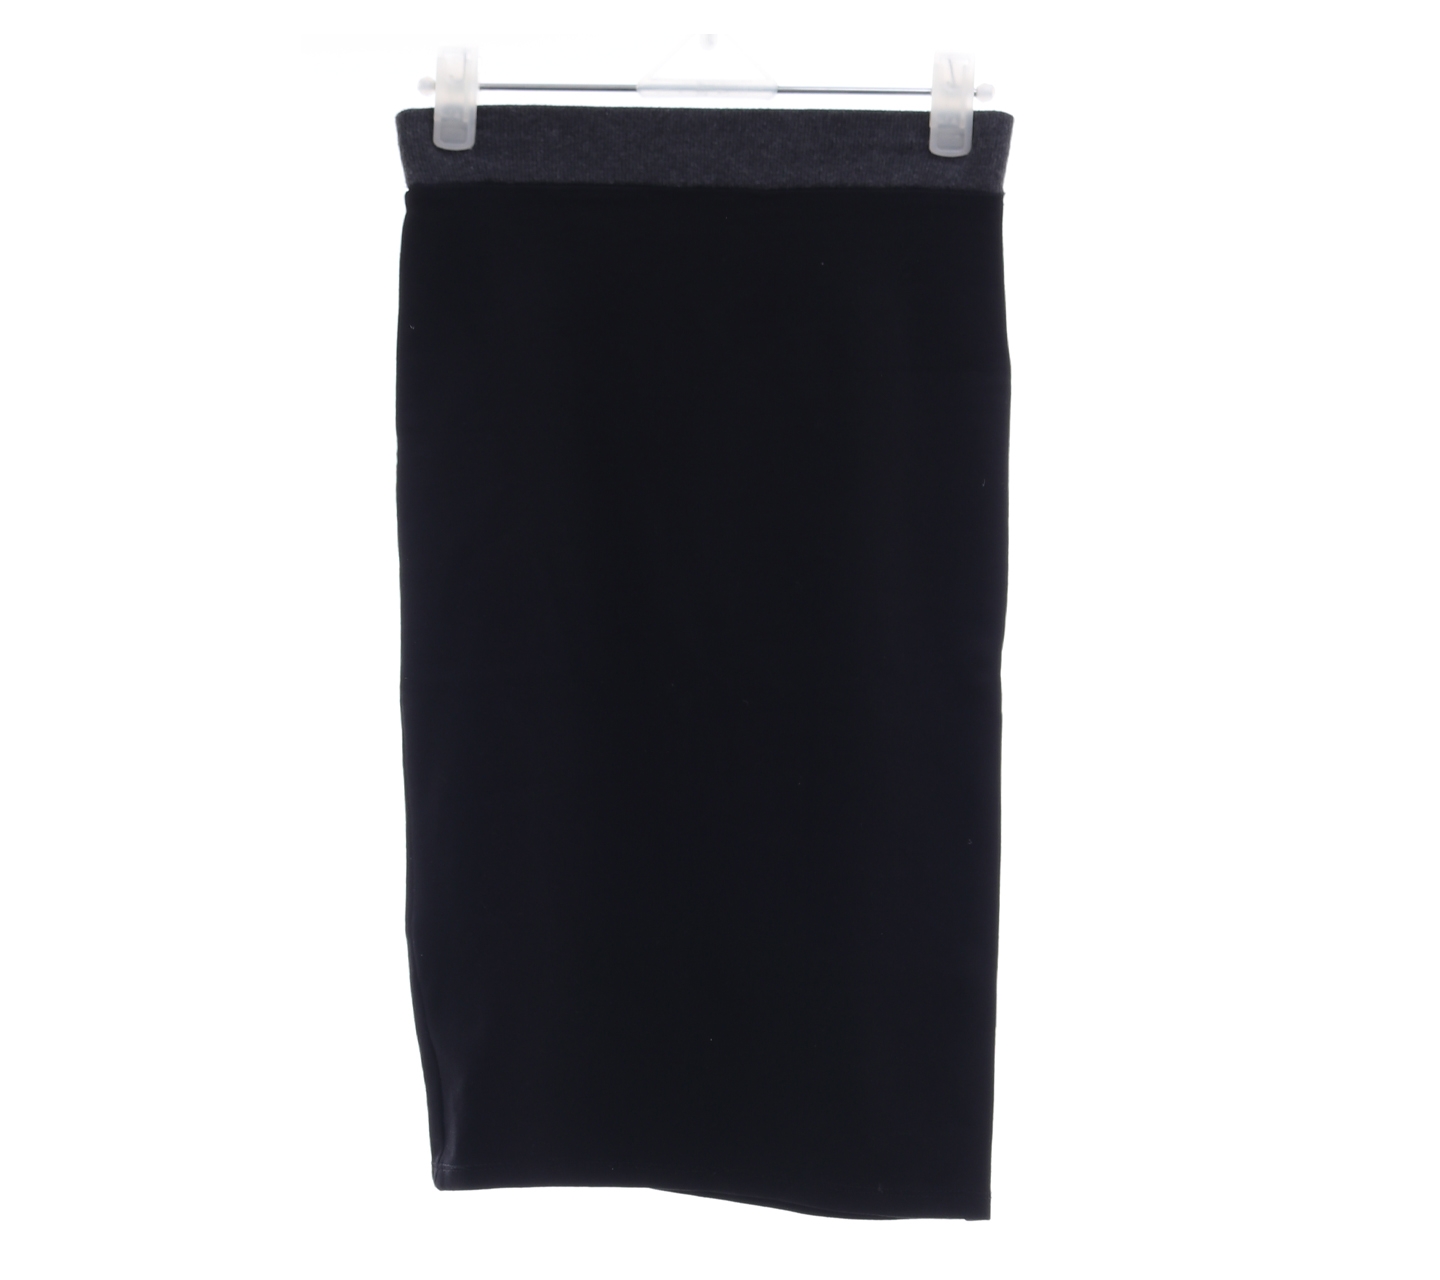 Zara Black Mini Skirt